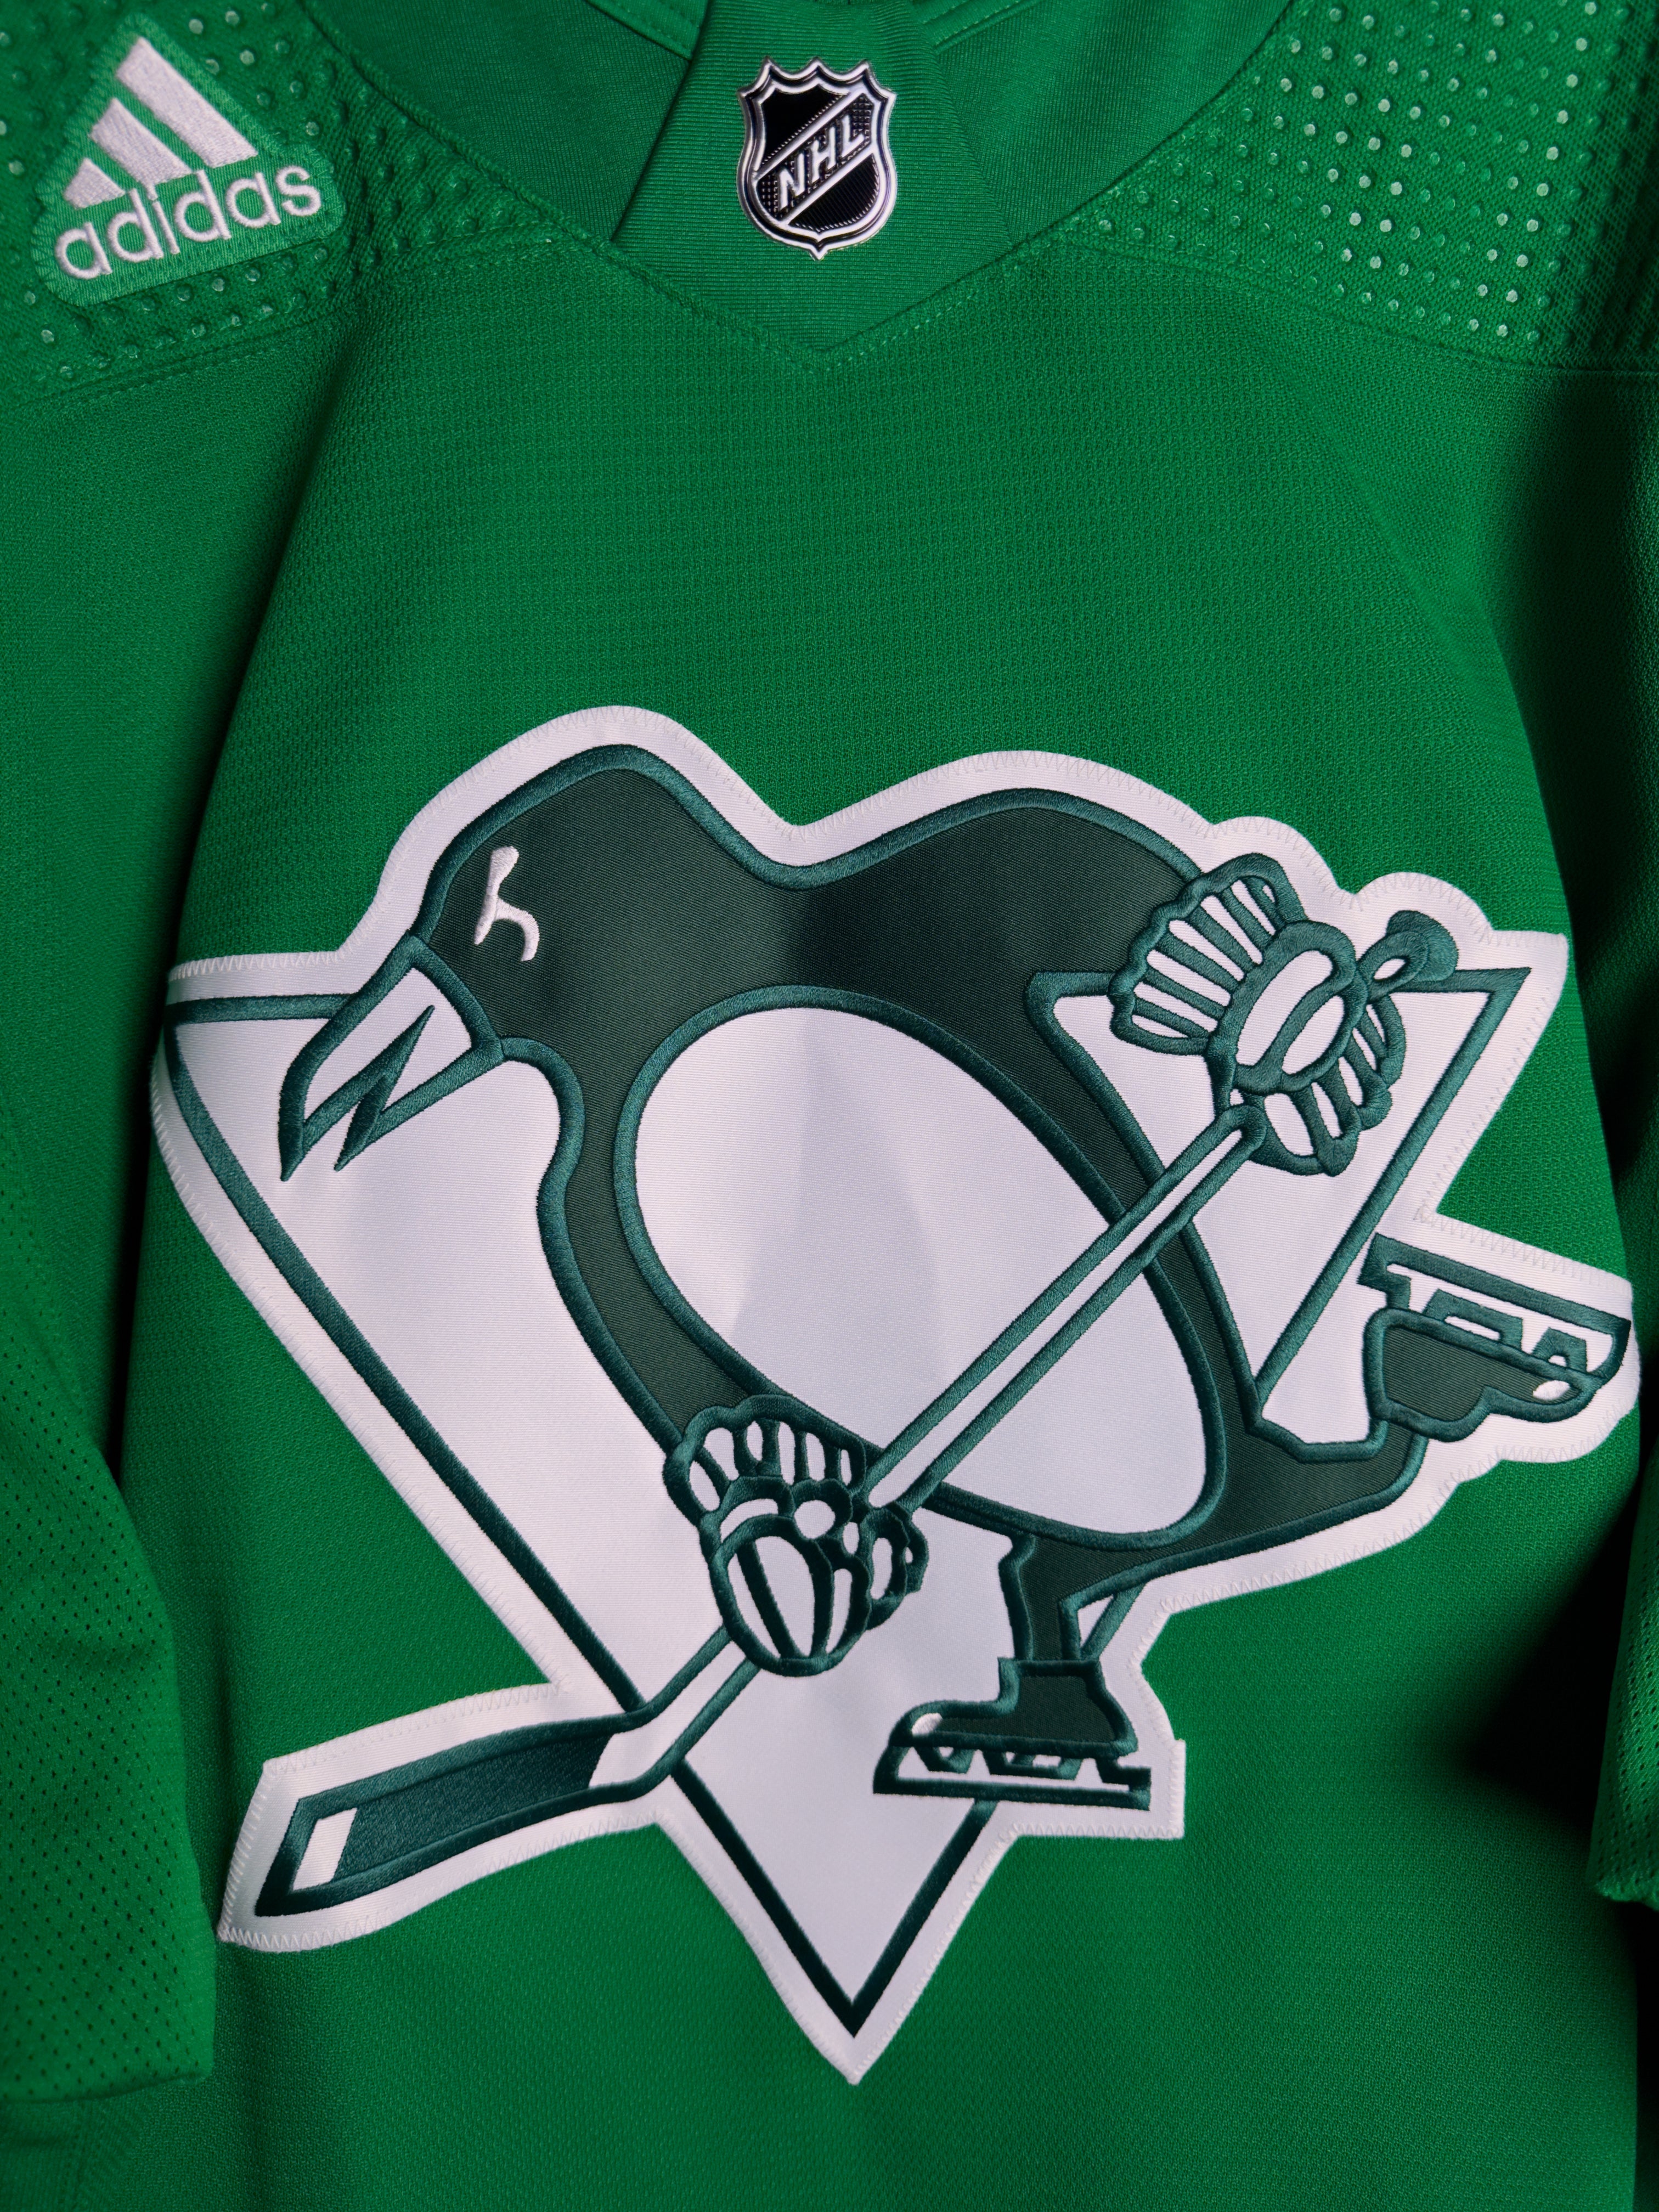 Pittsburgh Penguins NHL Adidas MiC Team Issued Shamrock Green Jersey Size 60G (Goalie Cut)